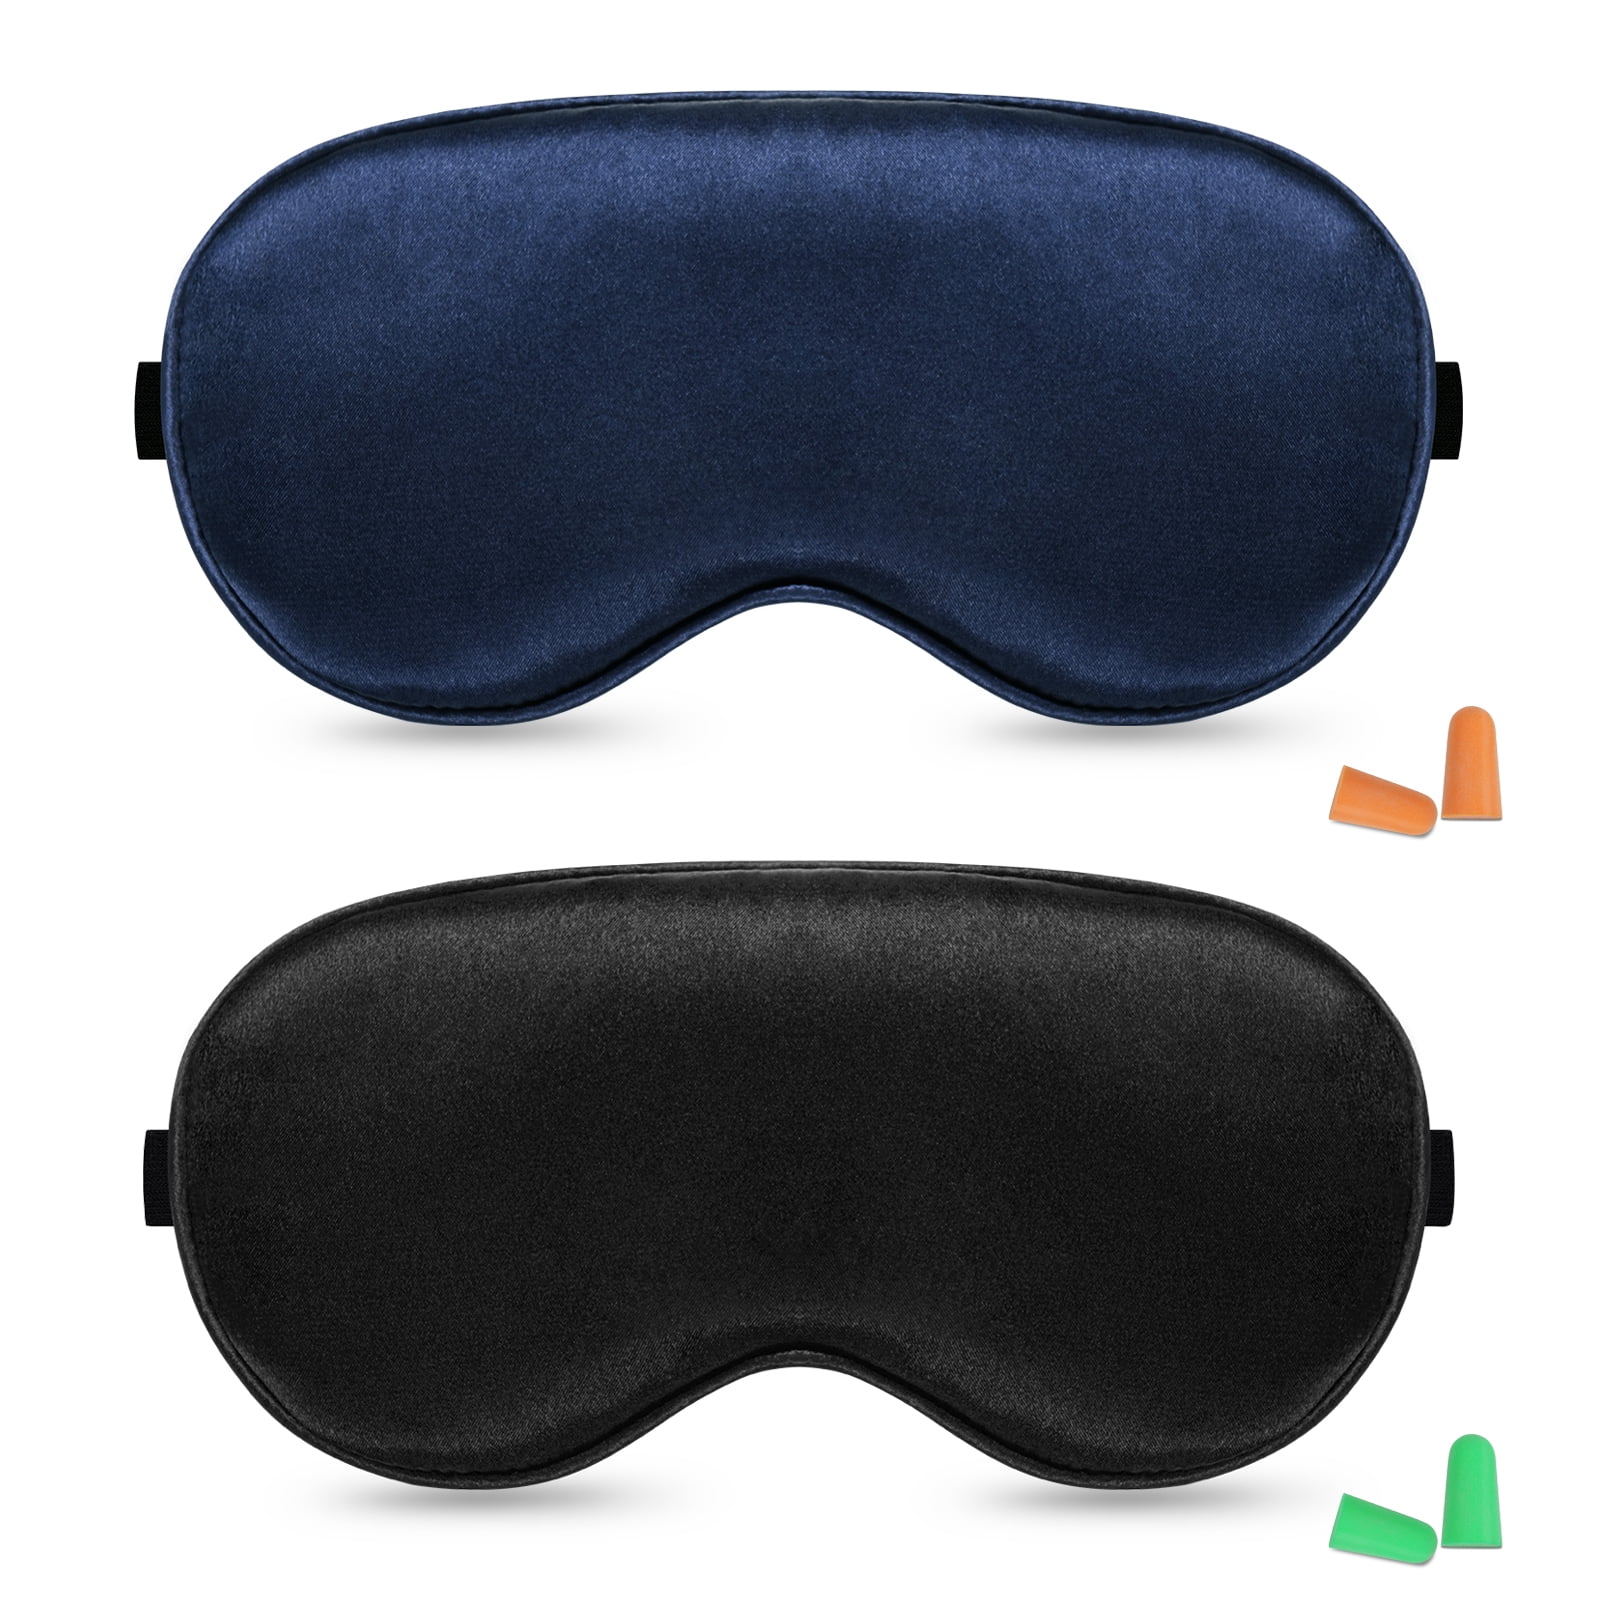 Infinity Sleep Mask (9 Colors)Breezy Blue - Clearance Sale